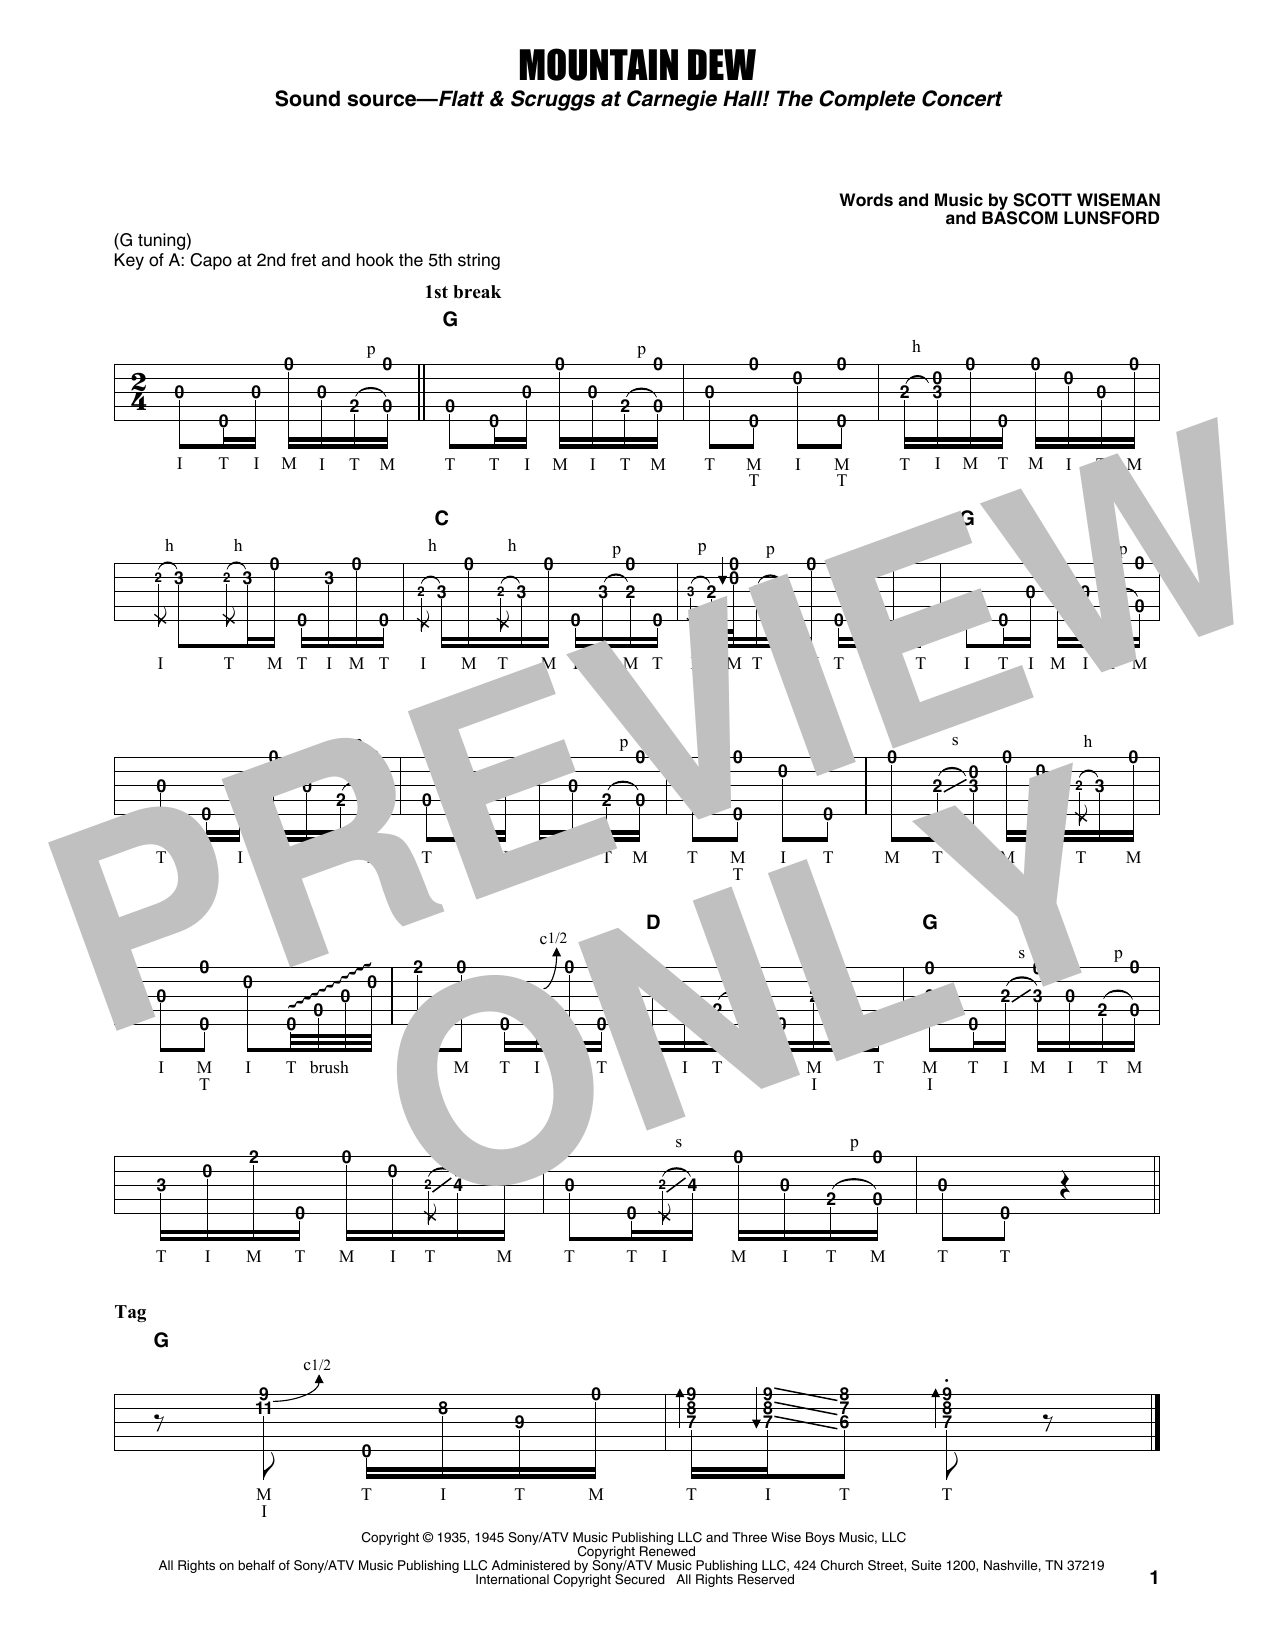 Flatt & Scruggs Mountain Dew Sheet Music Notes & Chords for Banjo Tab - Download or Print PDF